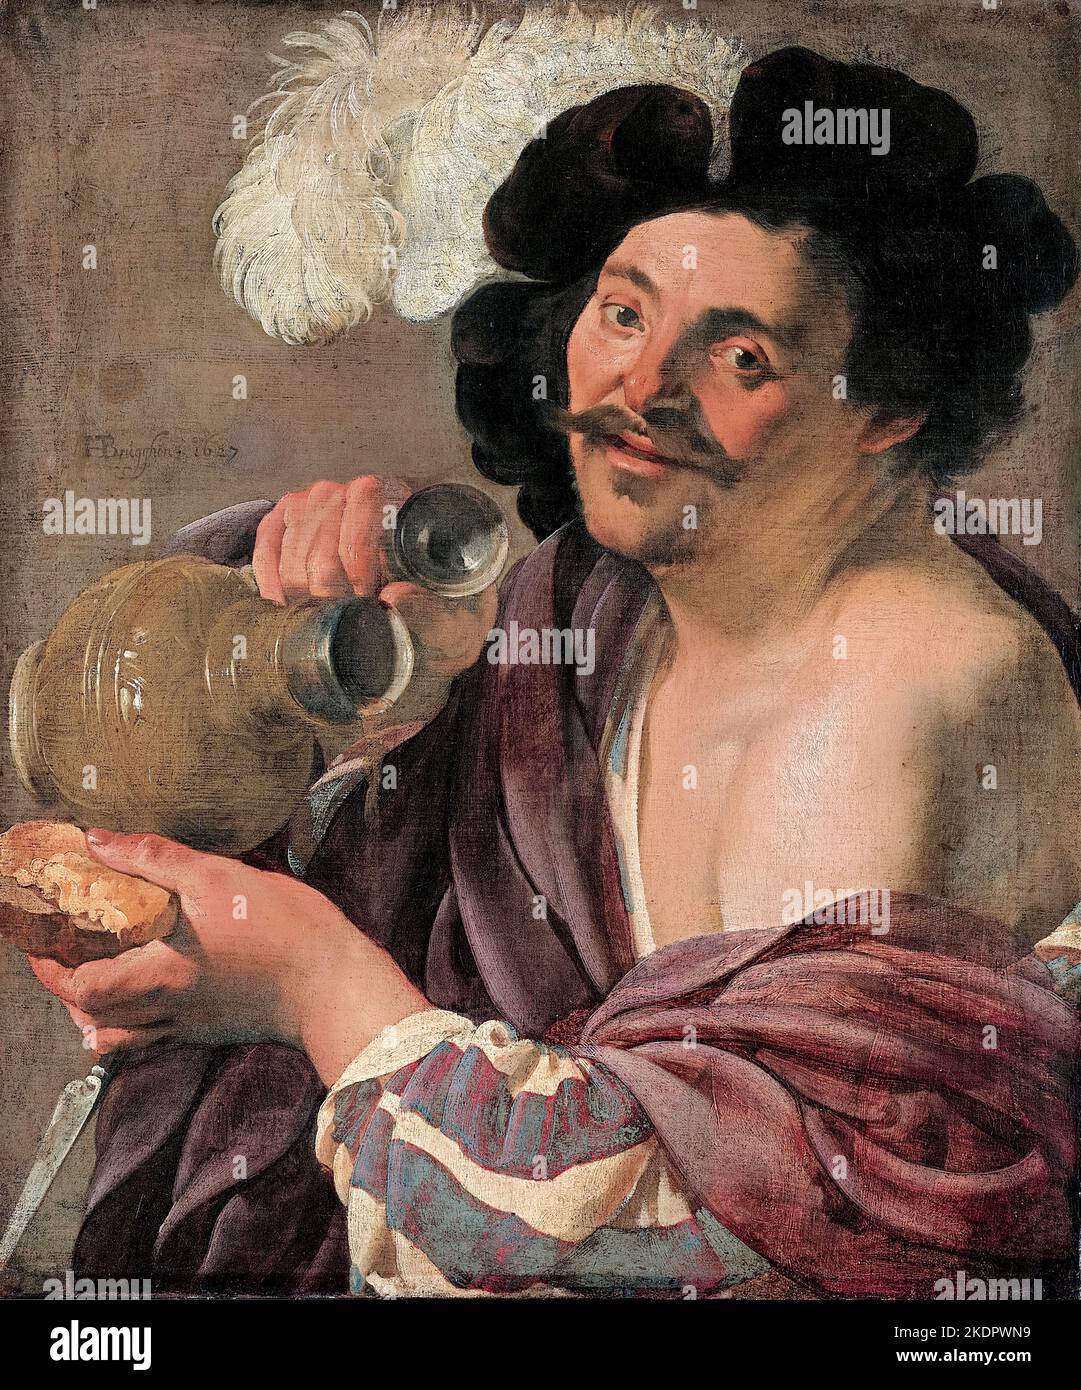 Hendrick ter Brugghen painting, The Reveller, oil on canvas, 1627 Stock Photo